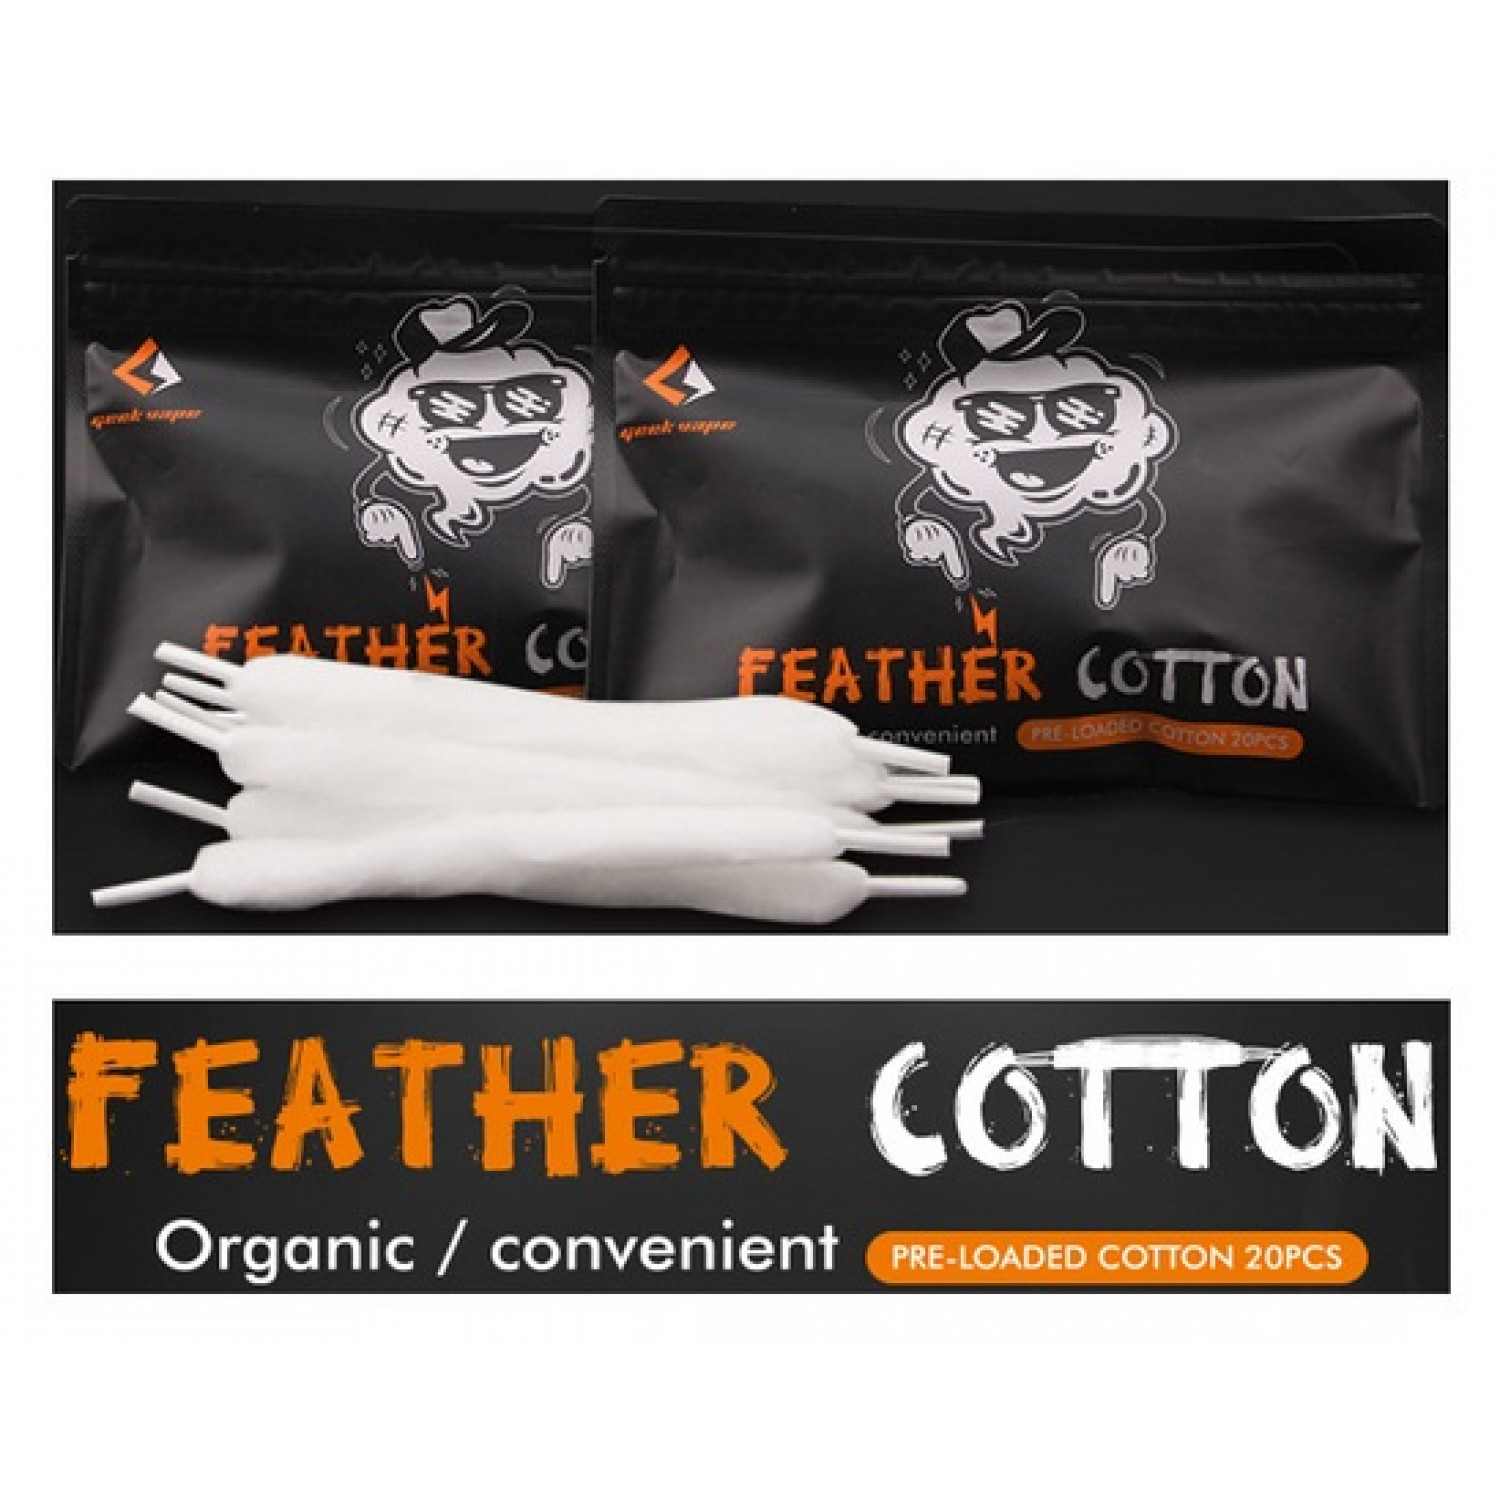 GeekVape Feather Cotton